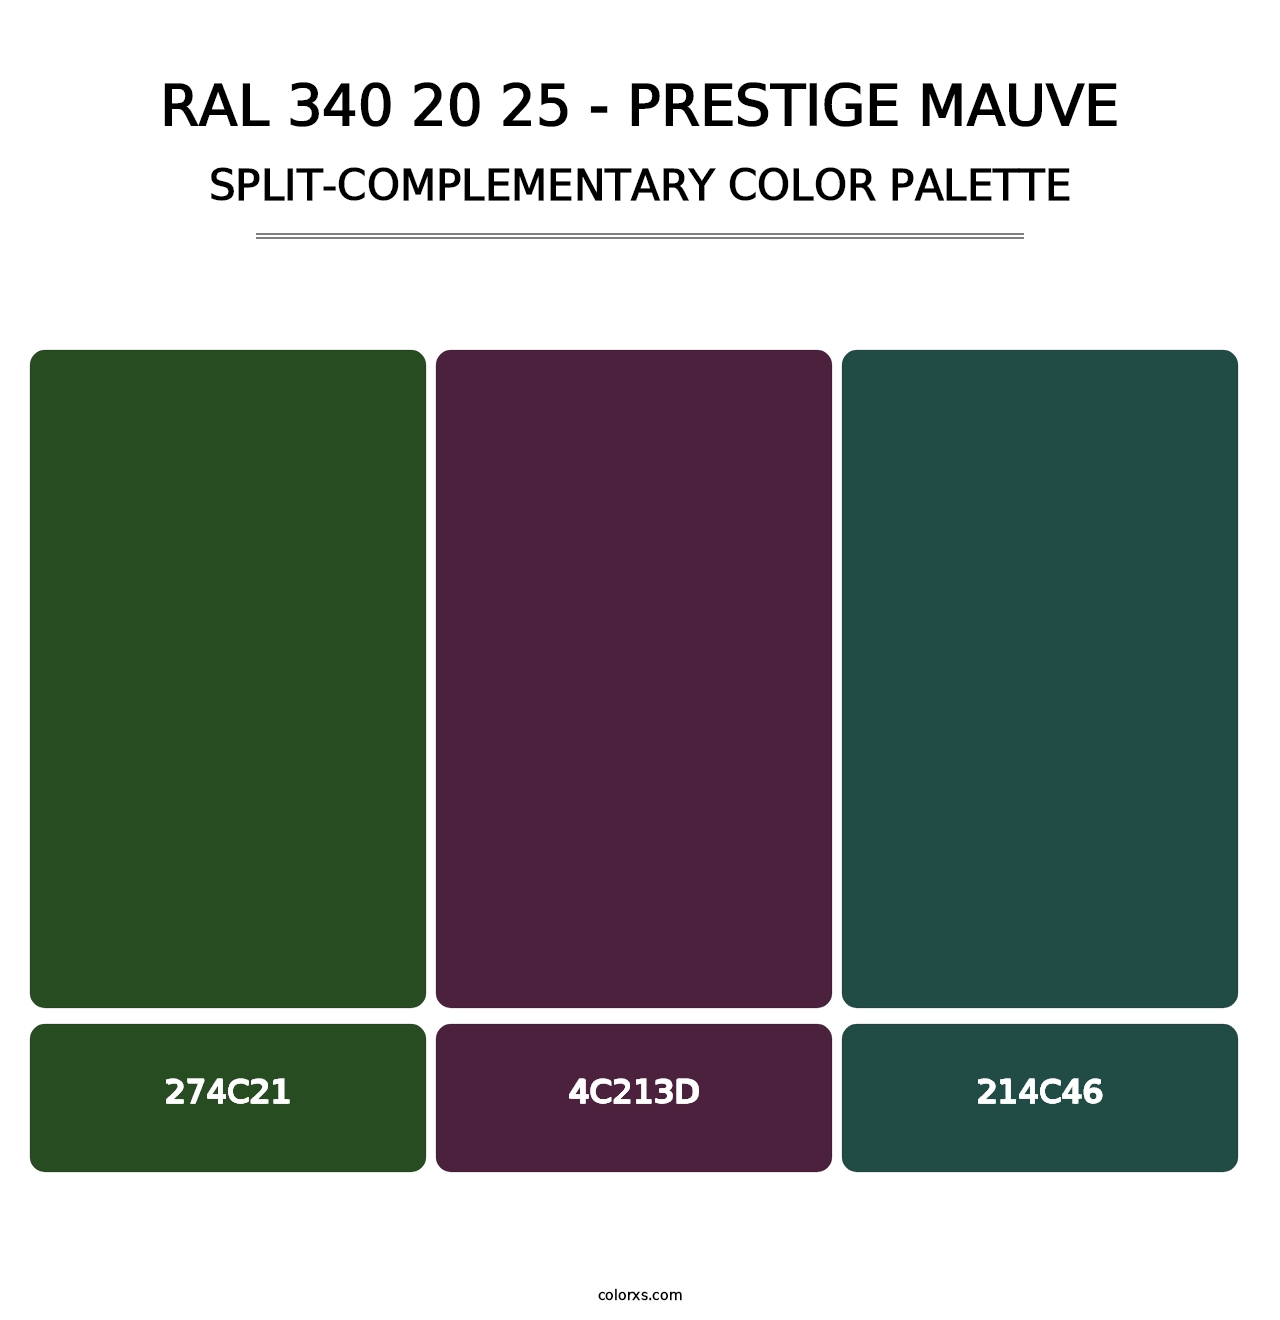 RAL 340 20 25 - Prestige Mauve - Split-Complementary Color Palette